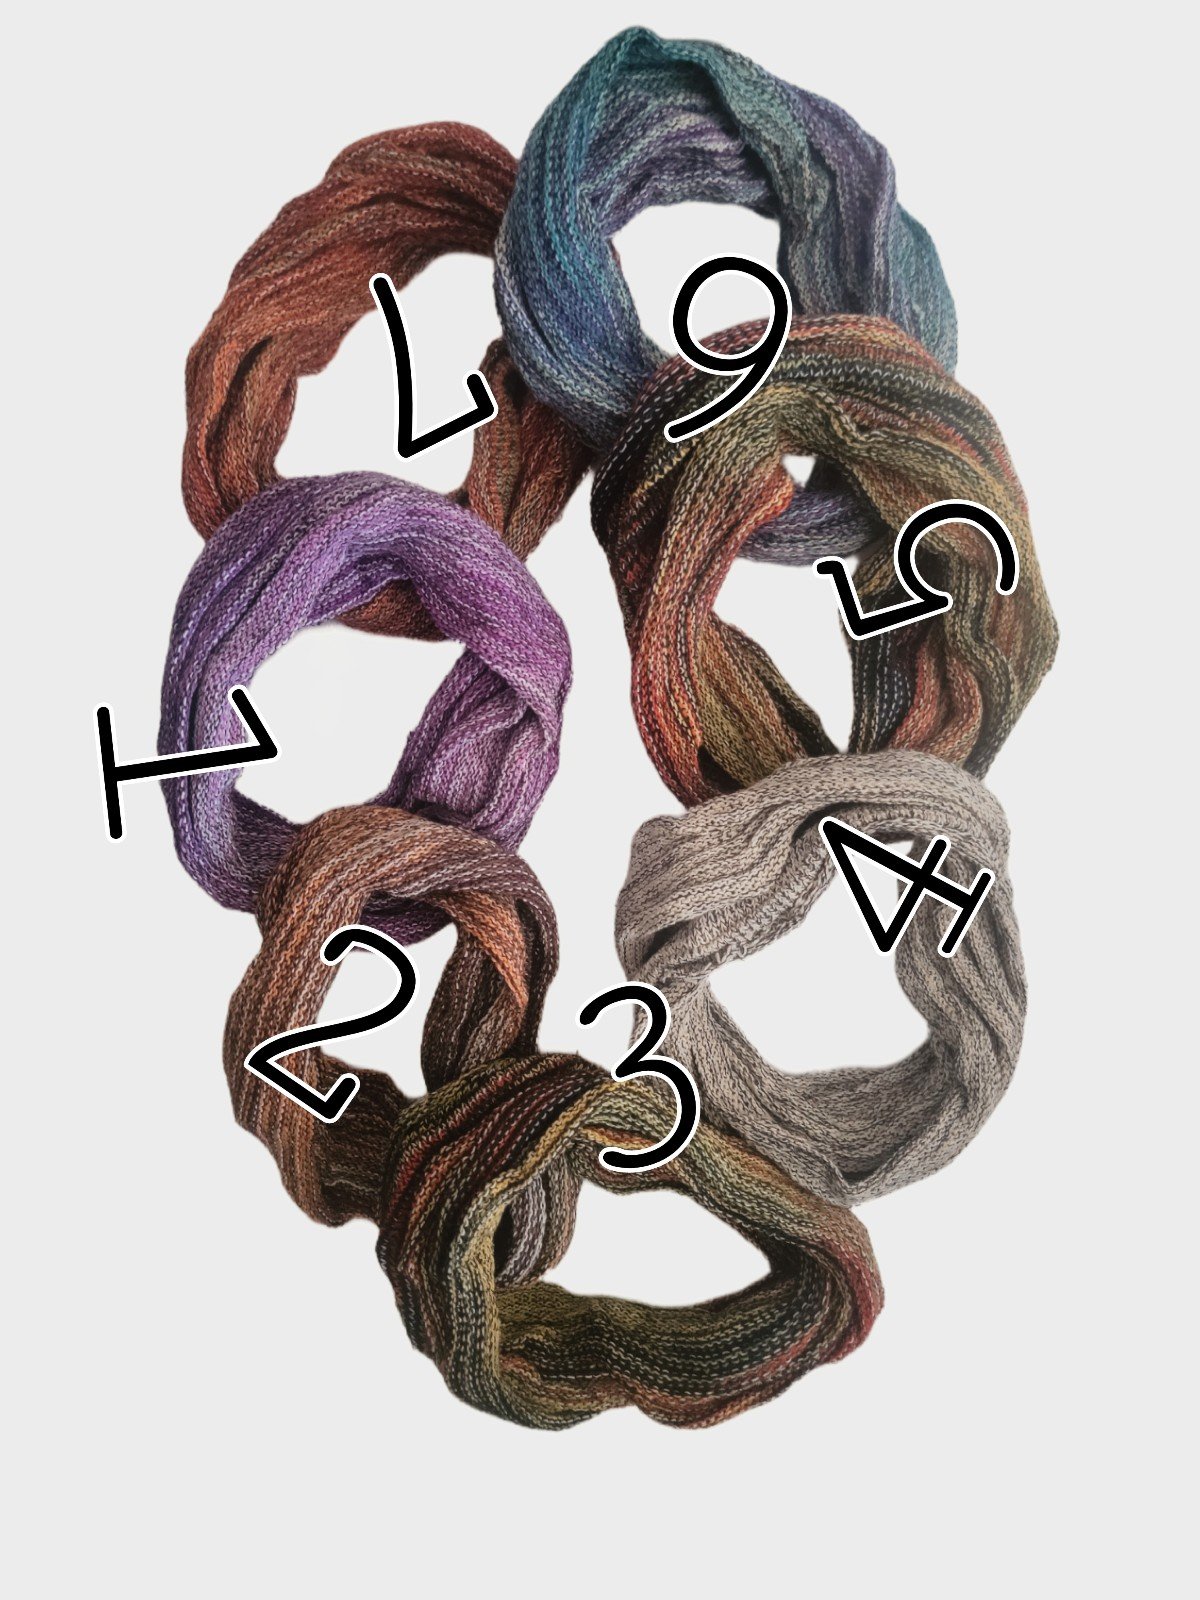 Super soft and stretchy hippie knit headbands Cz3OpgJn2